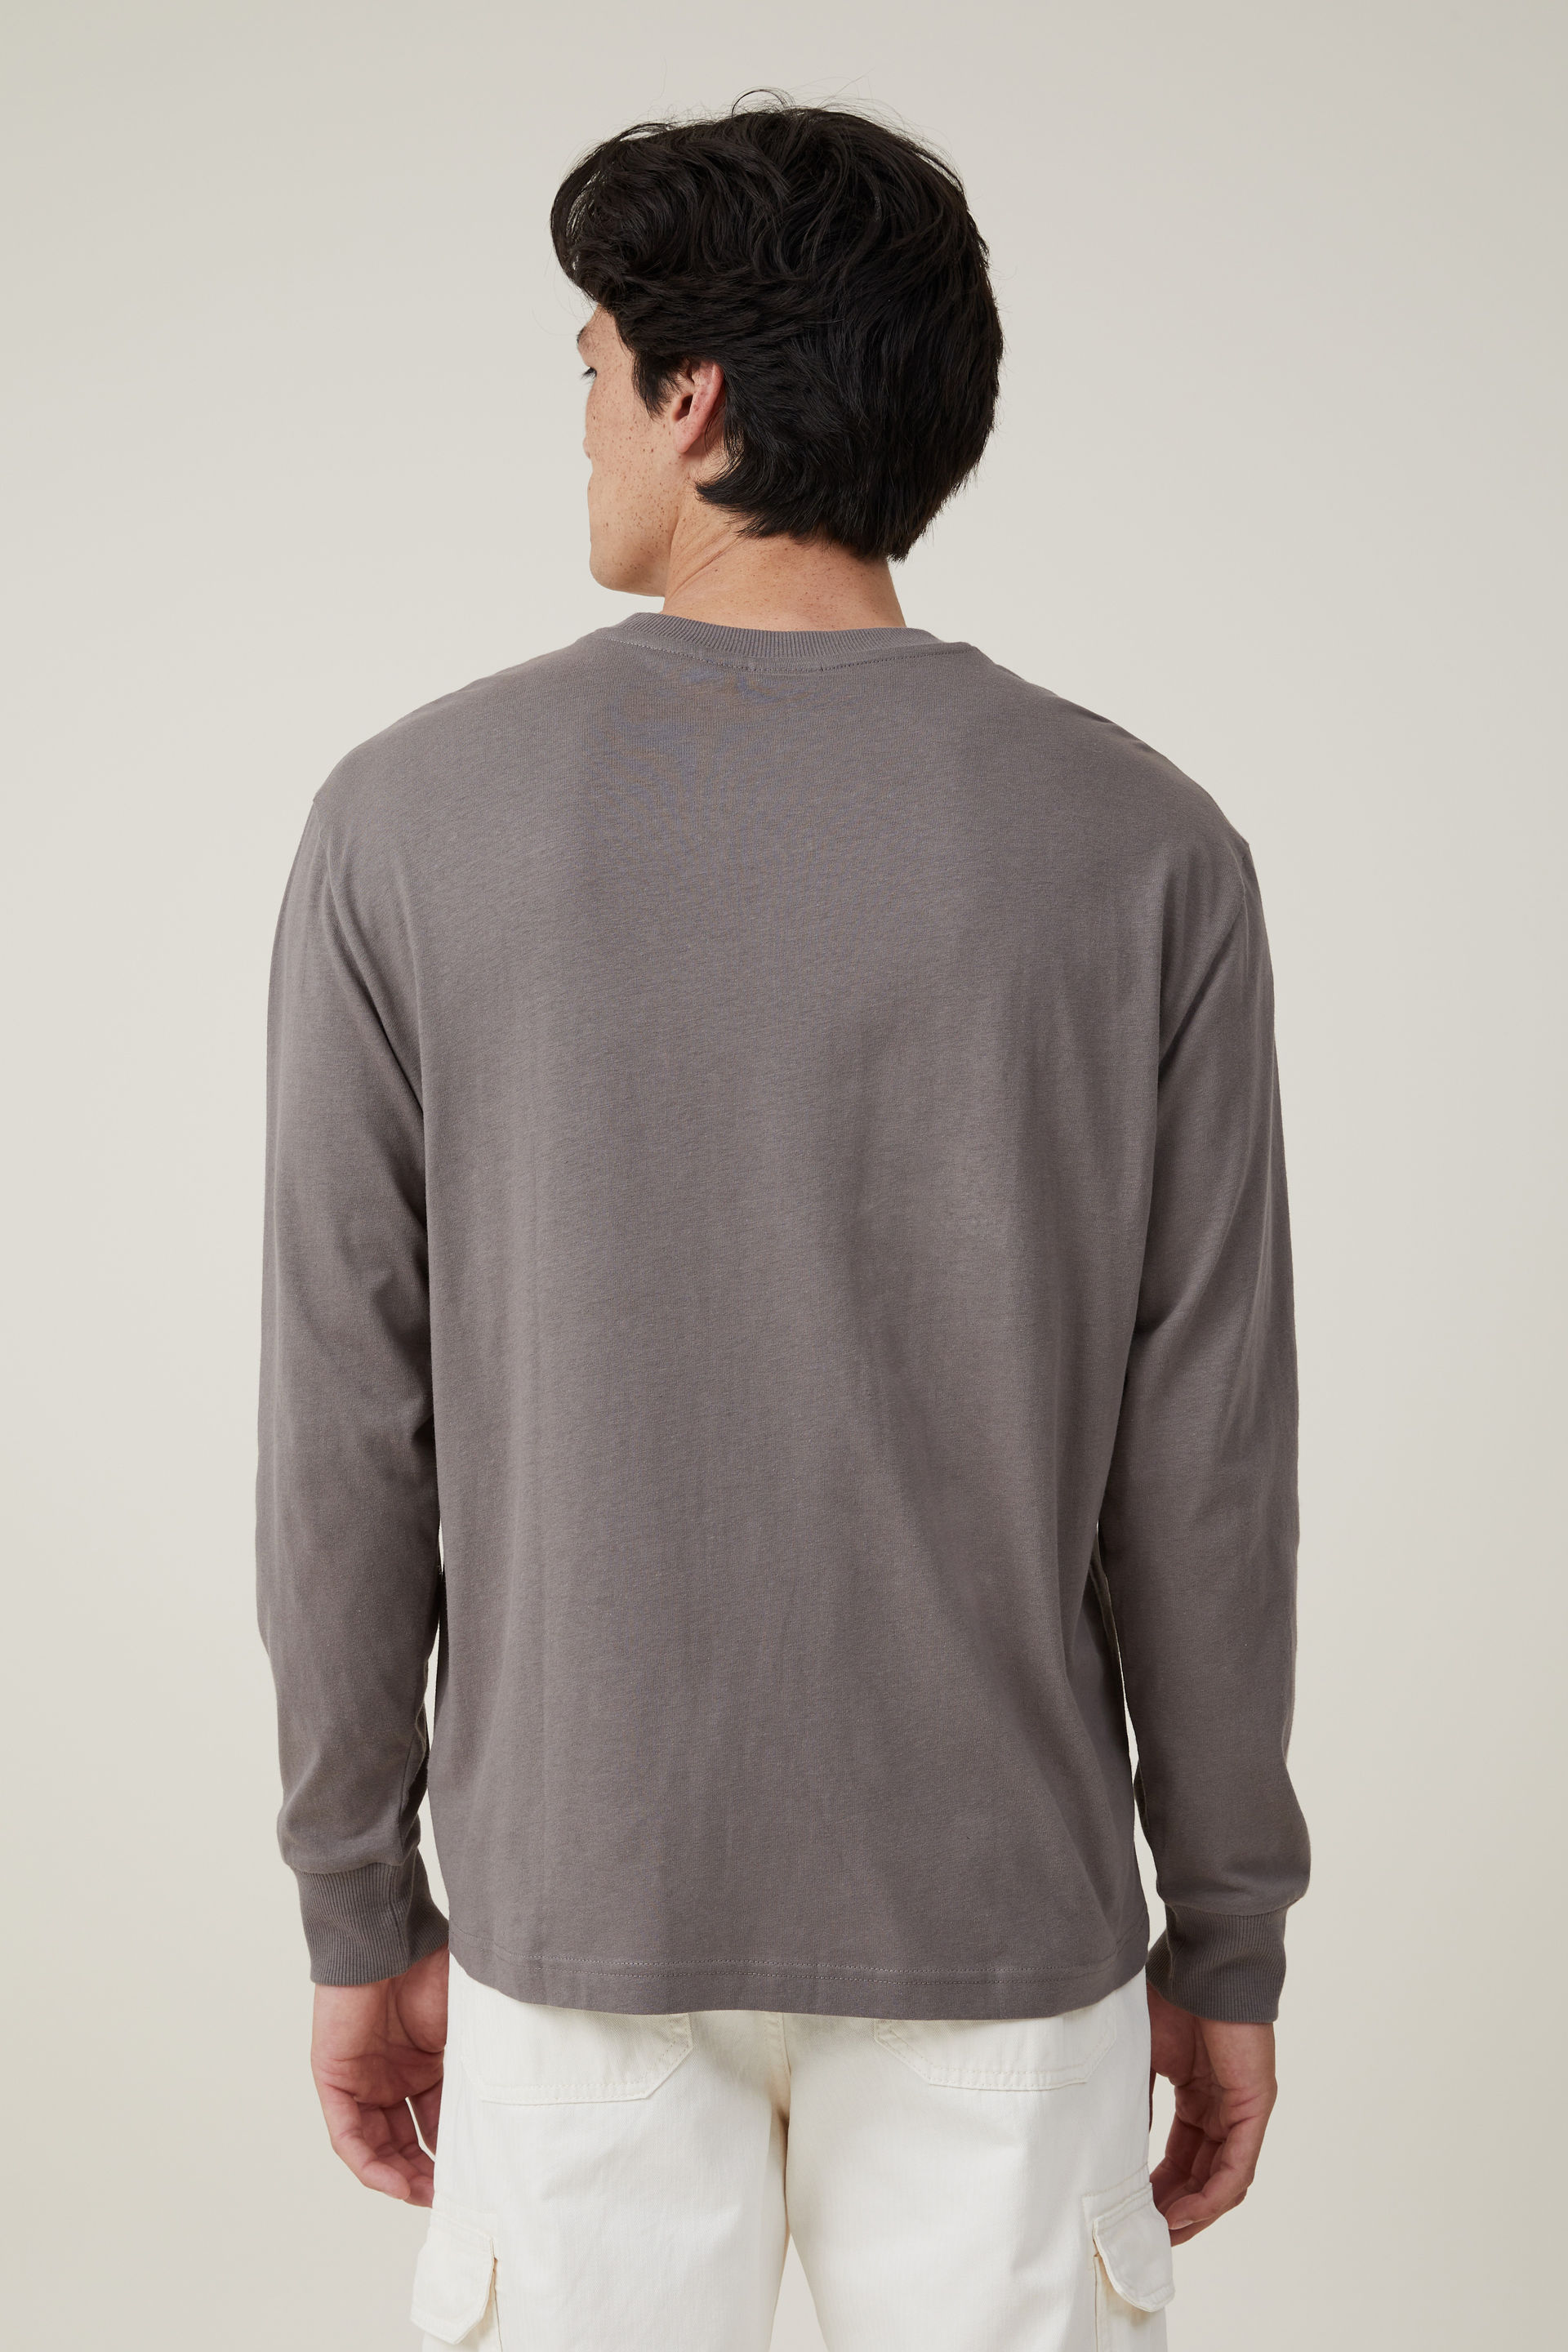 Men's Long Sleeve T Shirt - Slate Grey - Community Clothing